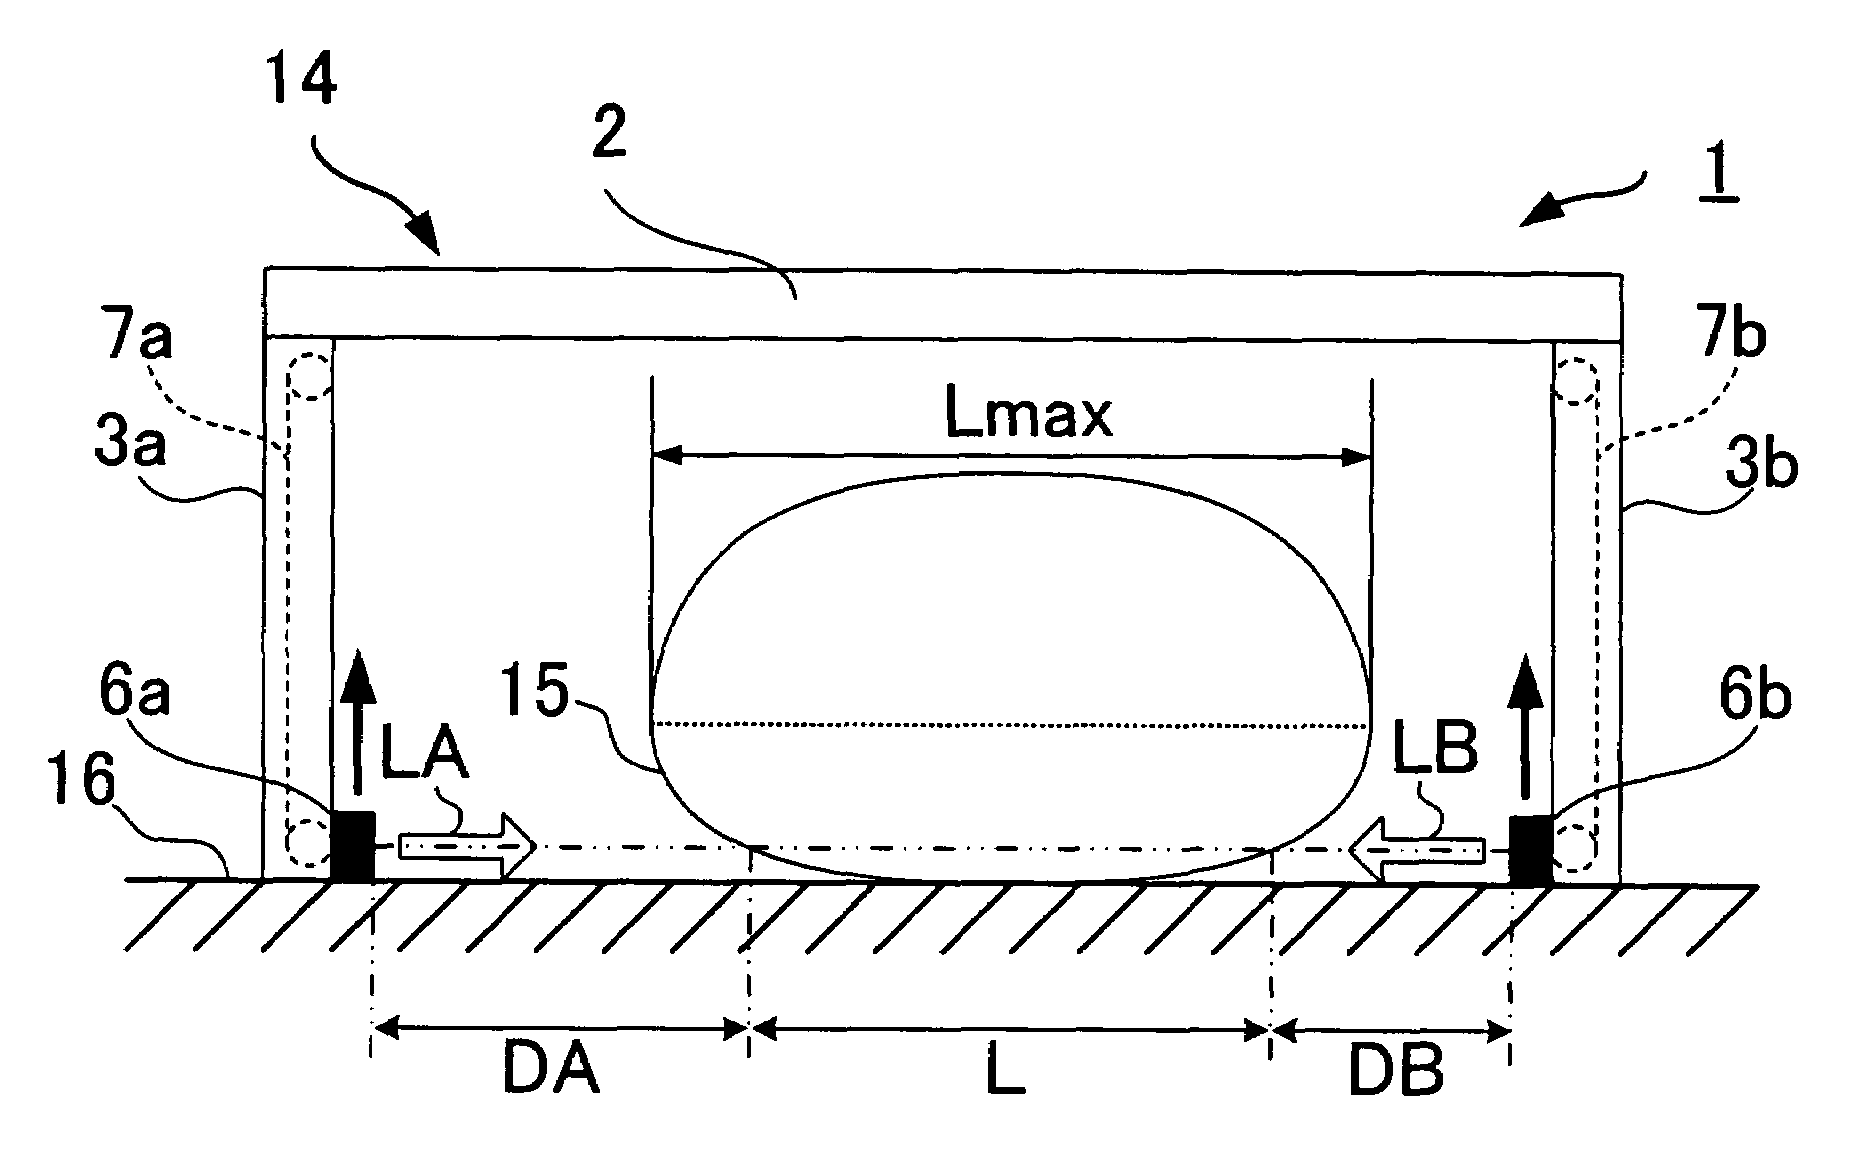 Linear measurement apparatus